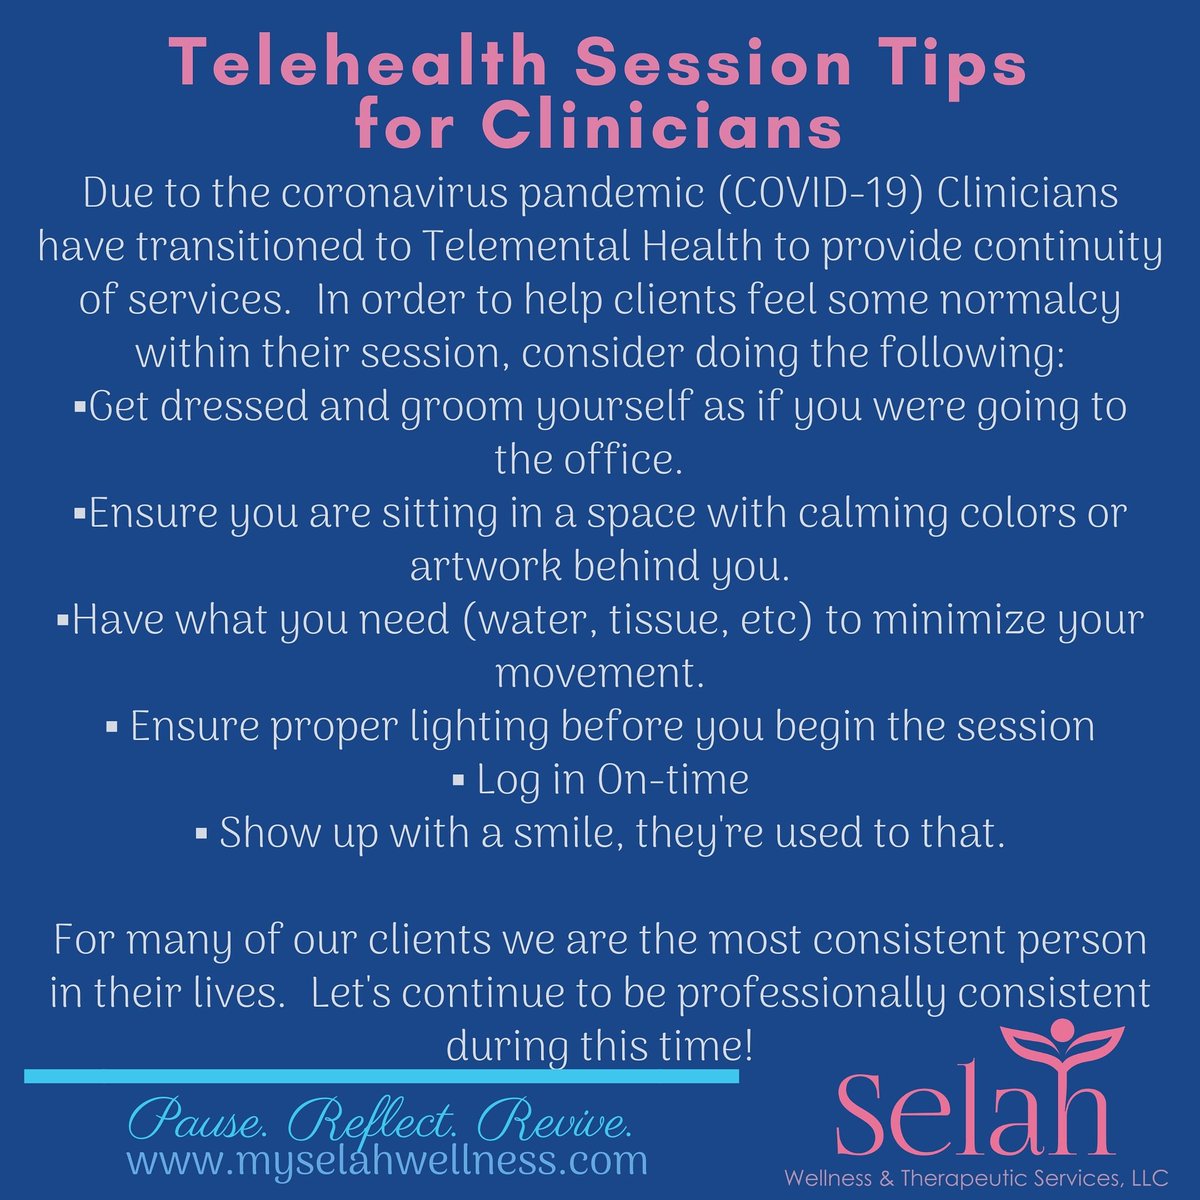 Telehealth Session Tips for Clinicians. 
Have a great day on purpose! #telehealth #telementalhealth #covid19 #coronavirus #mentalhealth